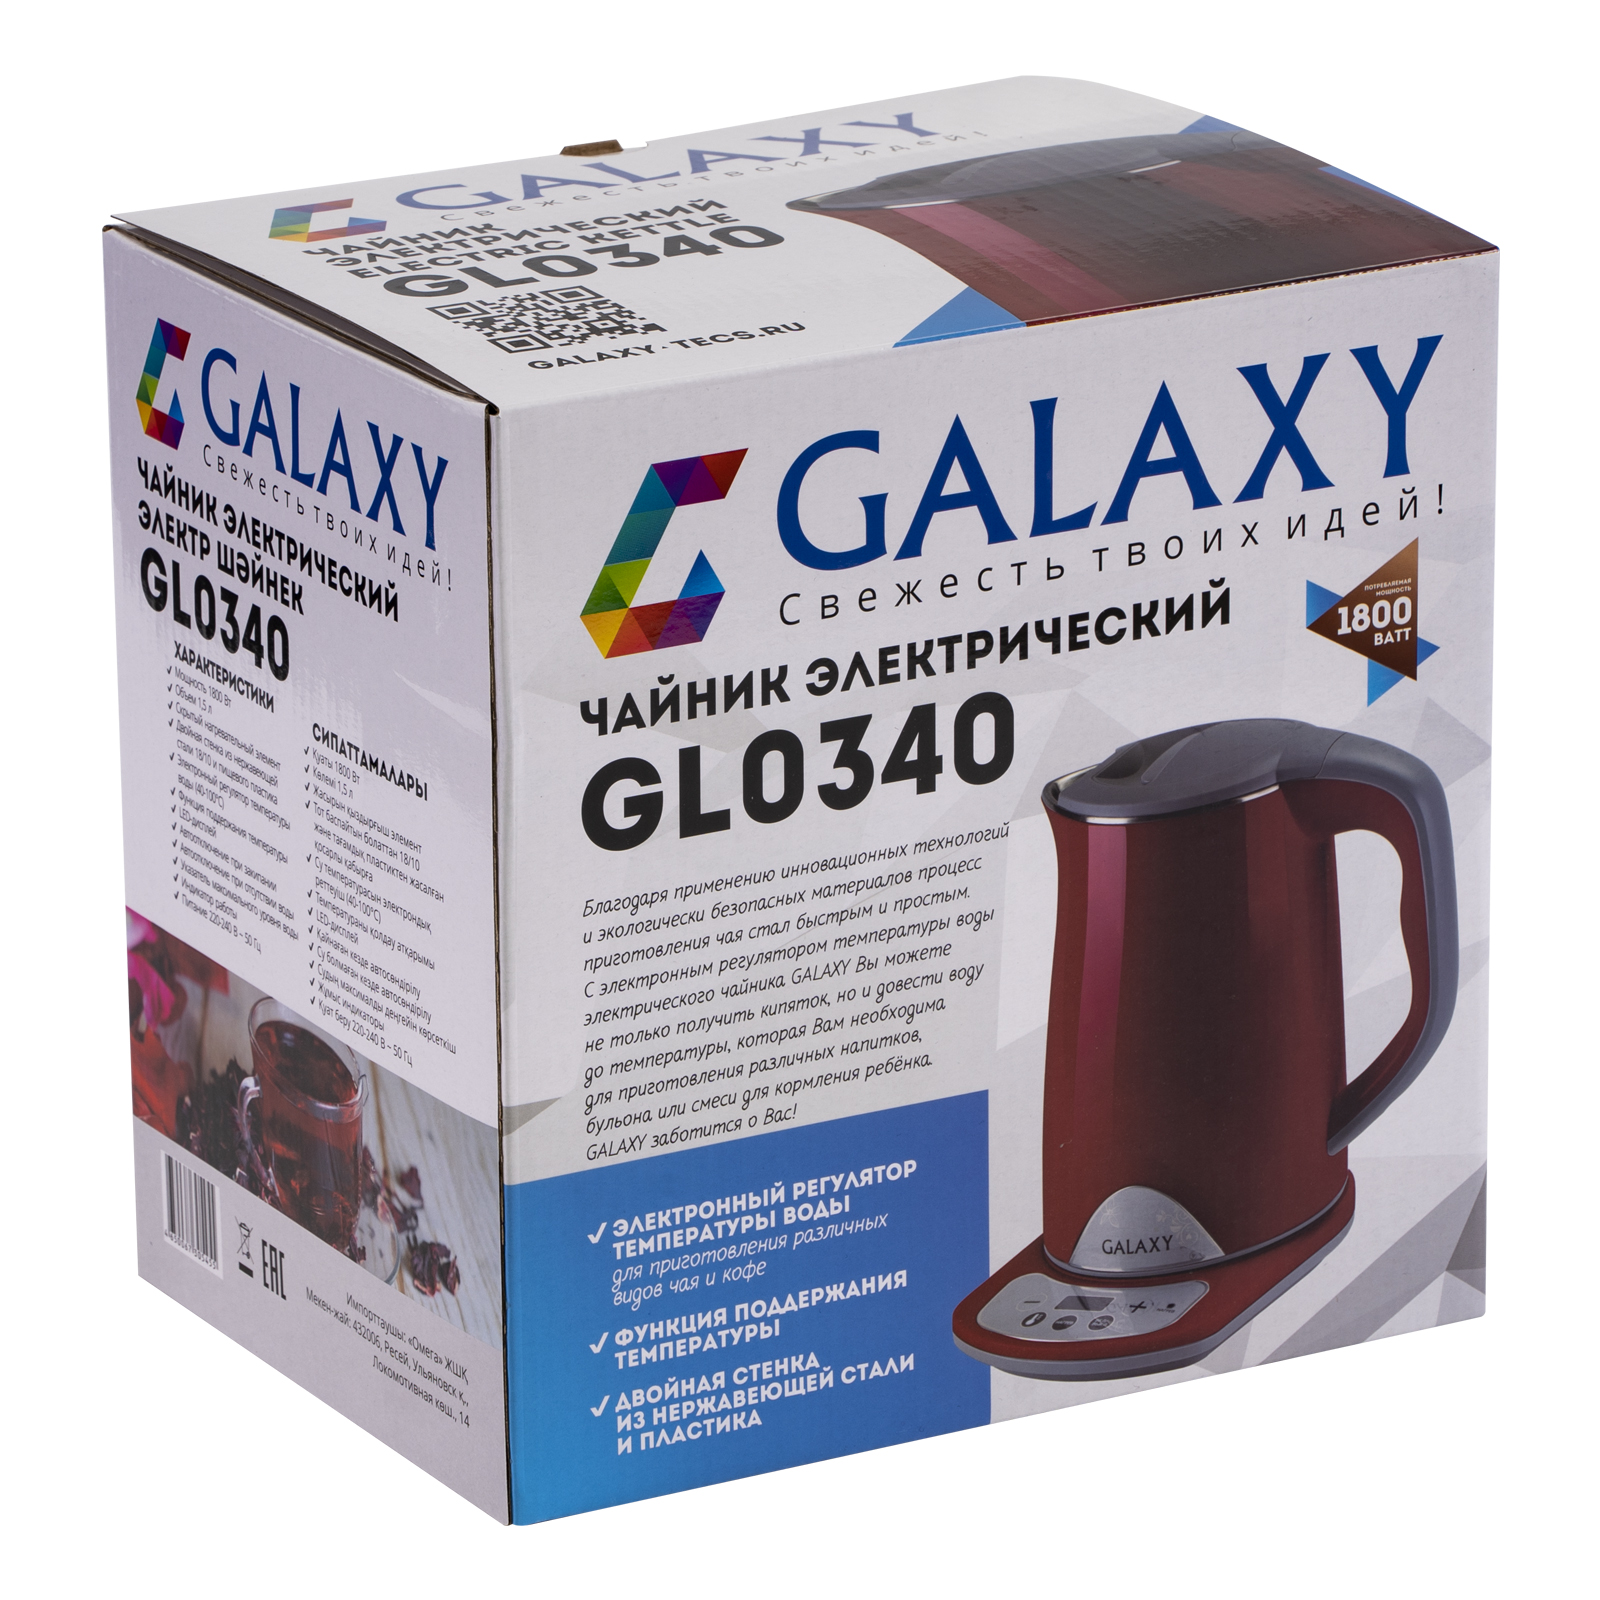 Чайник Galaxy gl0340 красный